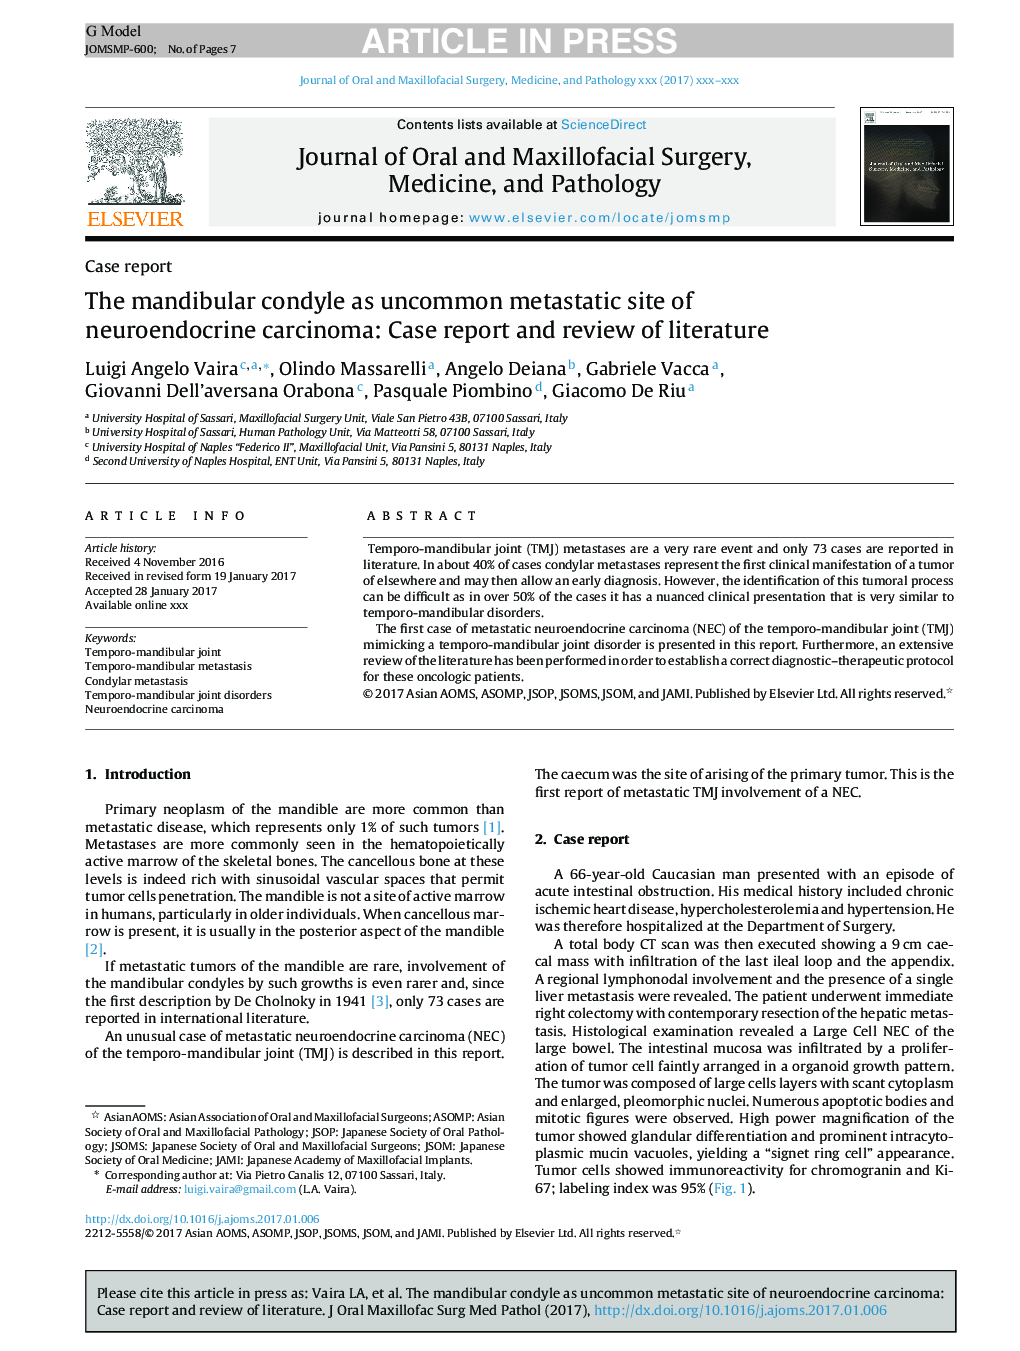 The mandibular condyle as uncommon metastatic site of neuroendocrine carcinoma: Case report and review of literature